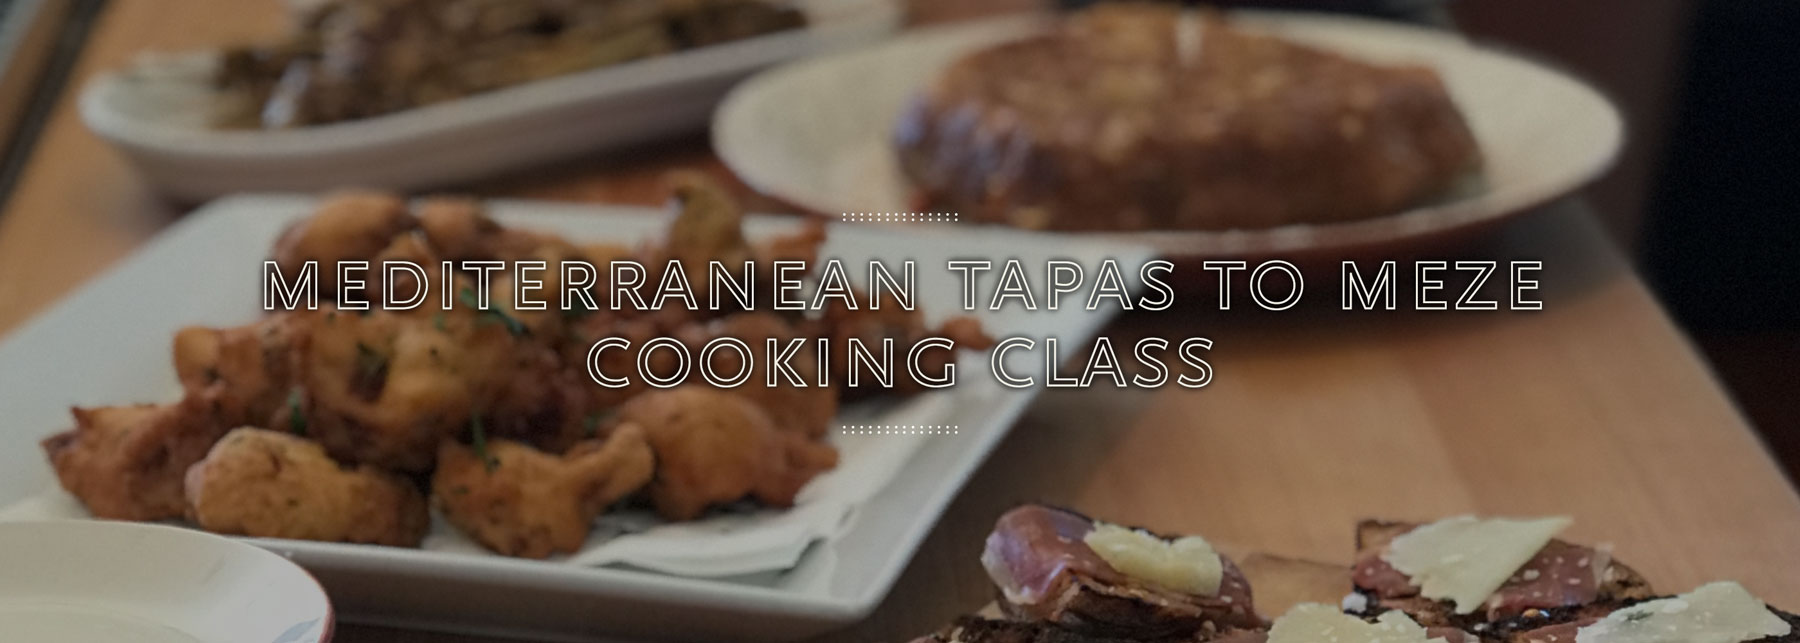 Mediterranean Tapas Weekend Cooking Class